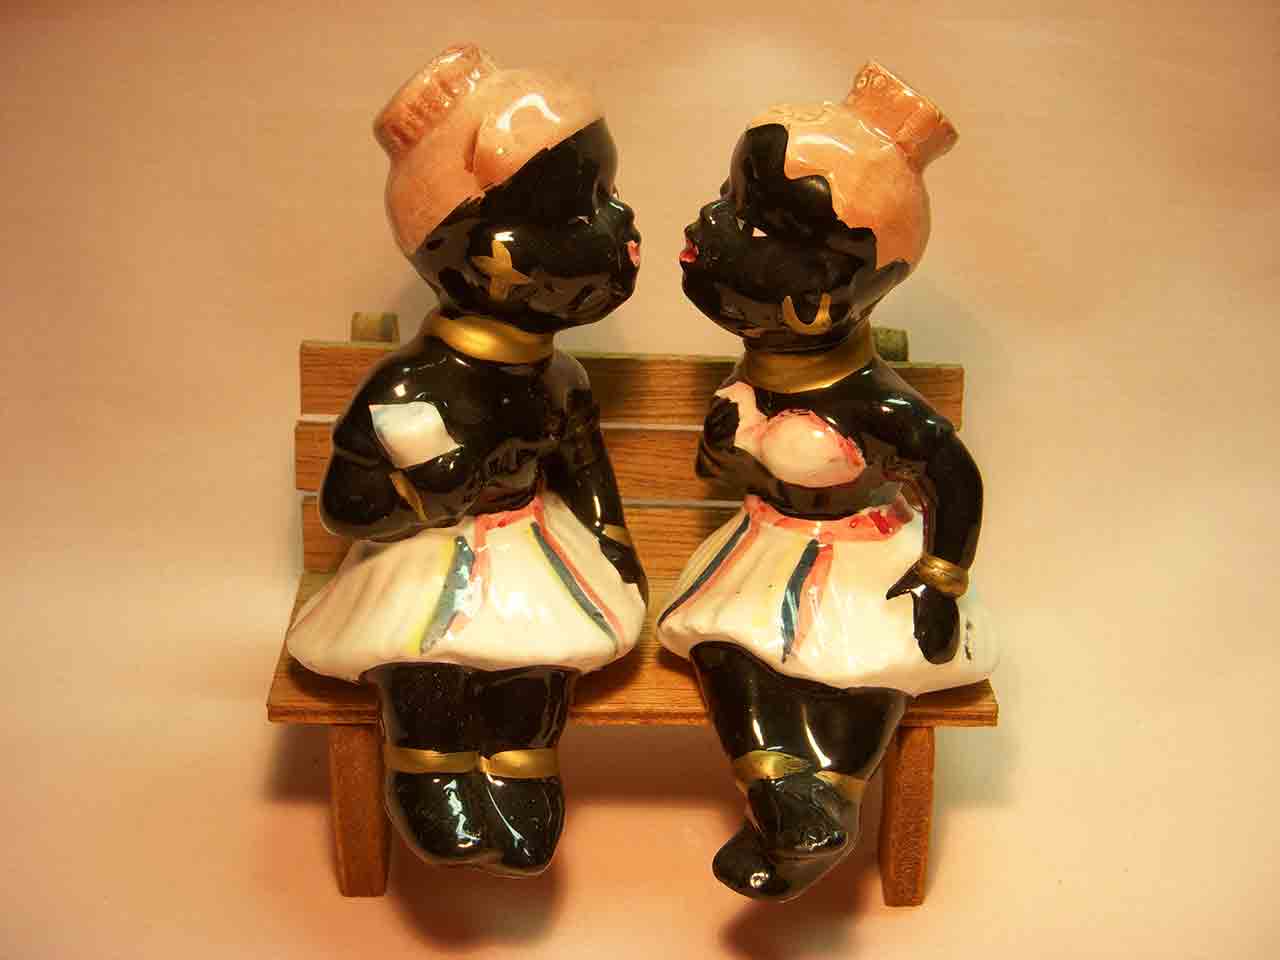 Black natives kissing sitting on wooden bench salt and pepper shaker